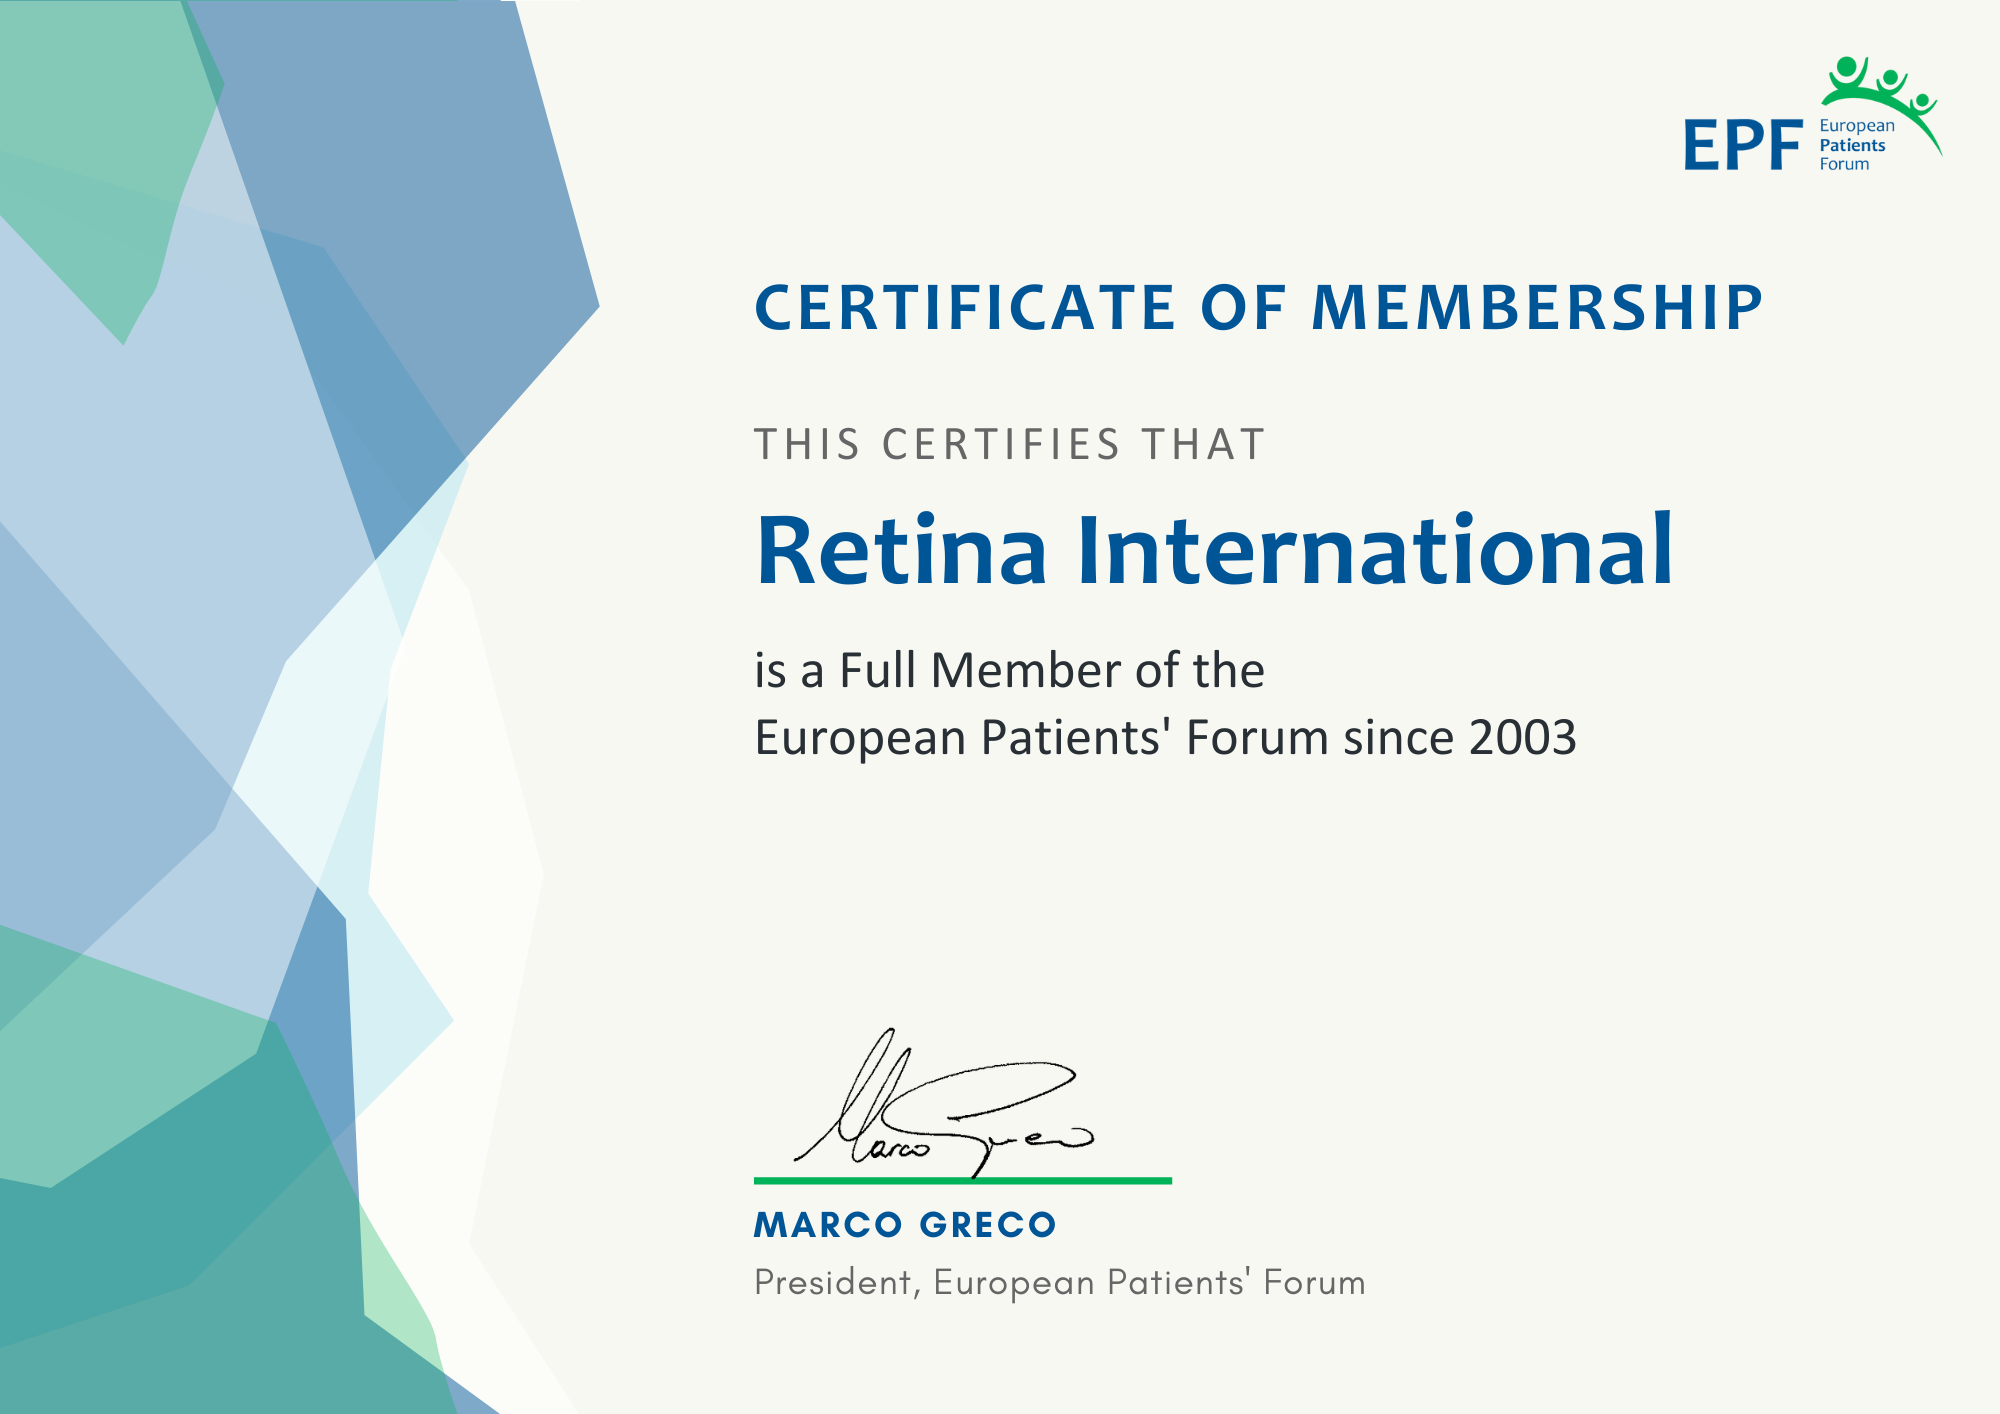 Retina International